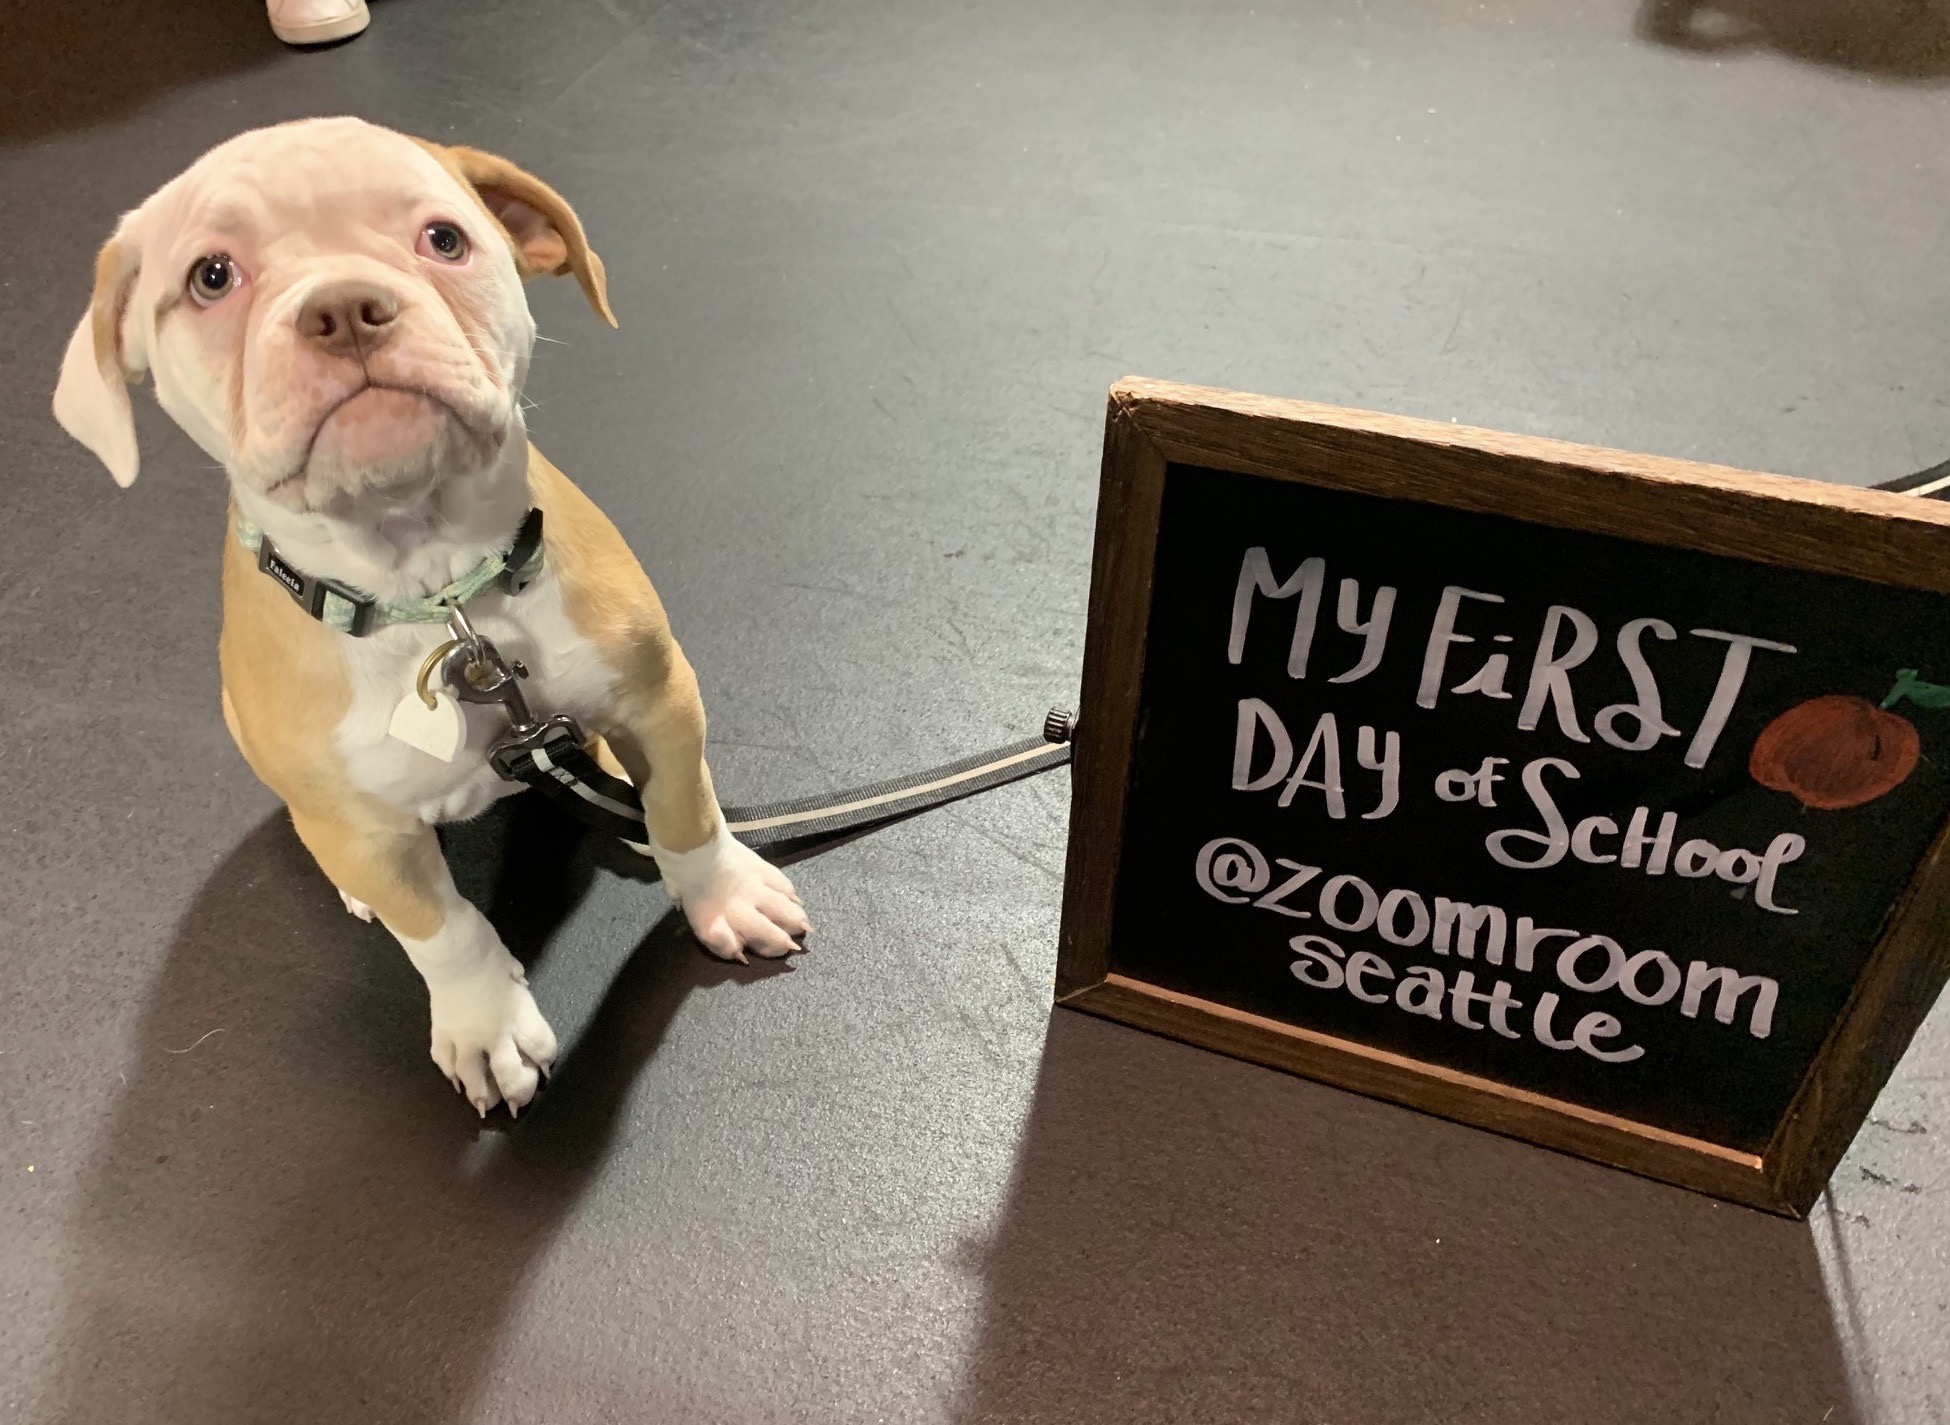 Rosie  Zoom Room Dog Training